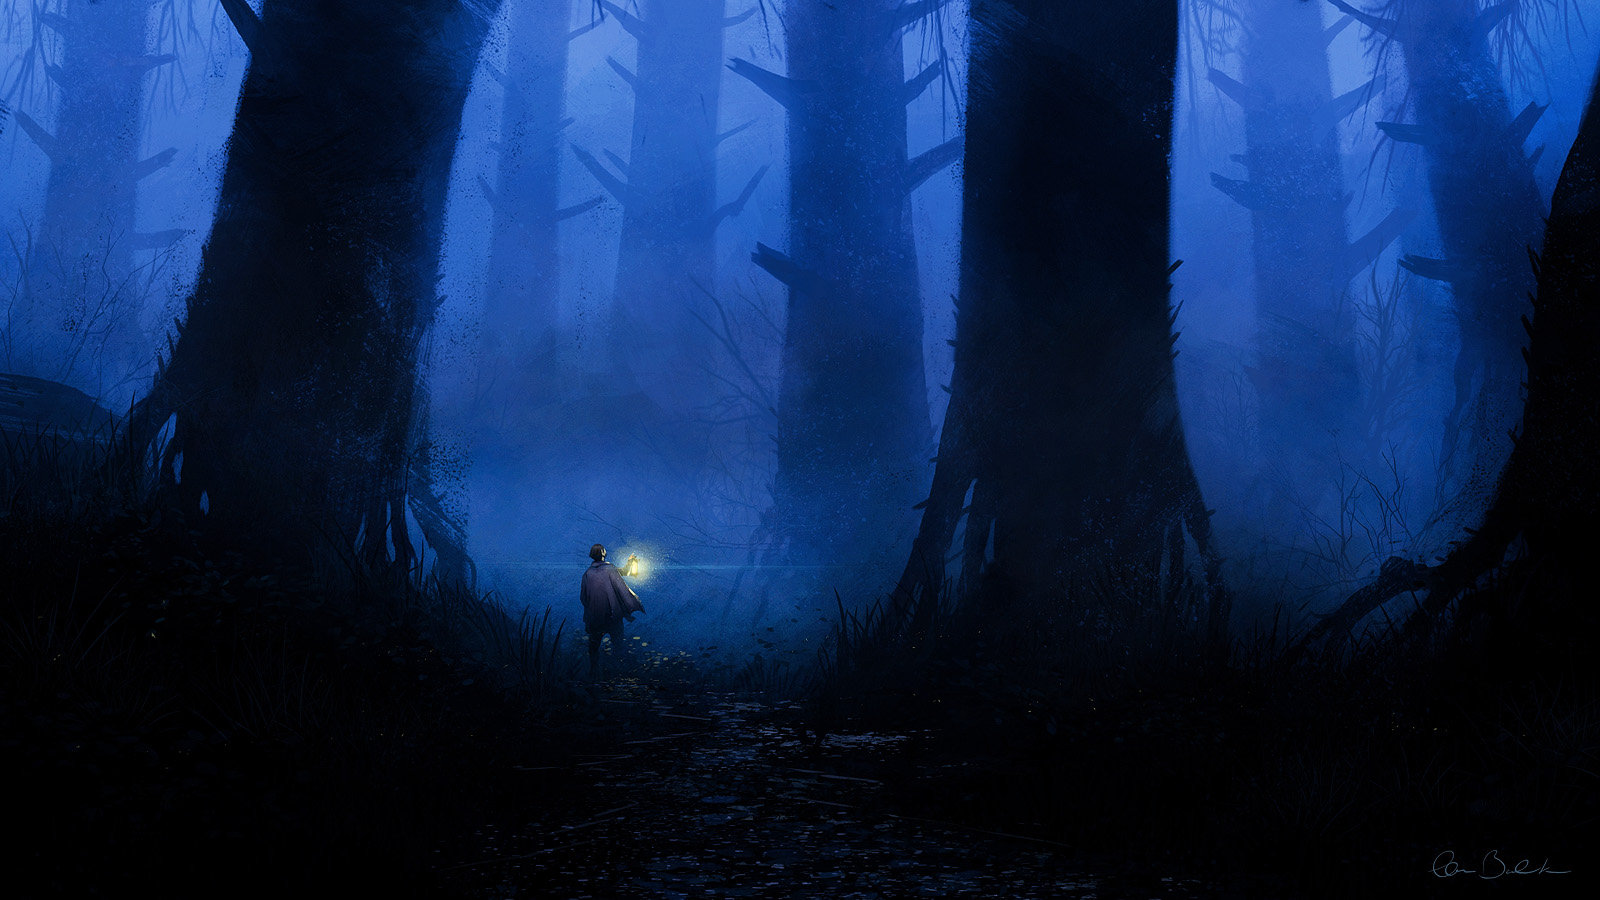 General 1600x900 Christopher Balaskas digital art fantasy art creepy dark trees forest nature blue deep forest